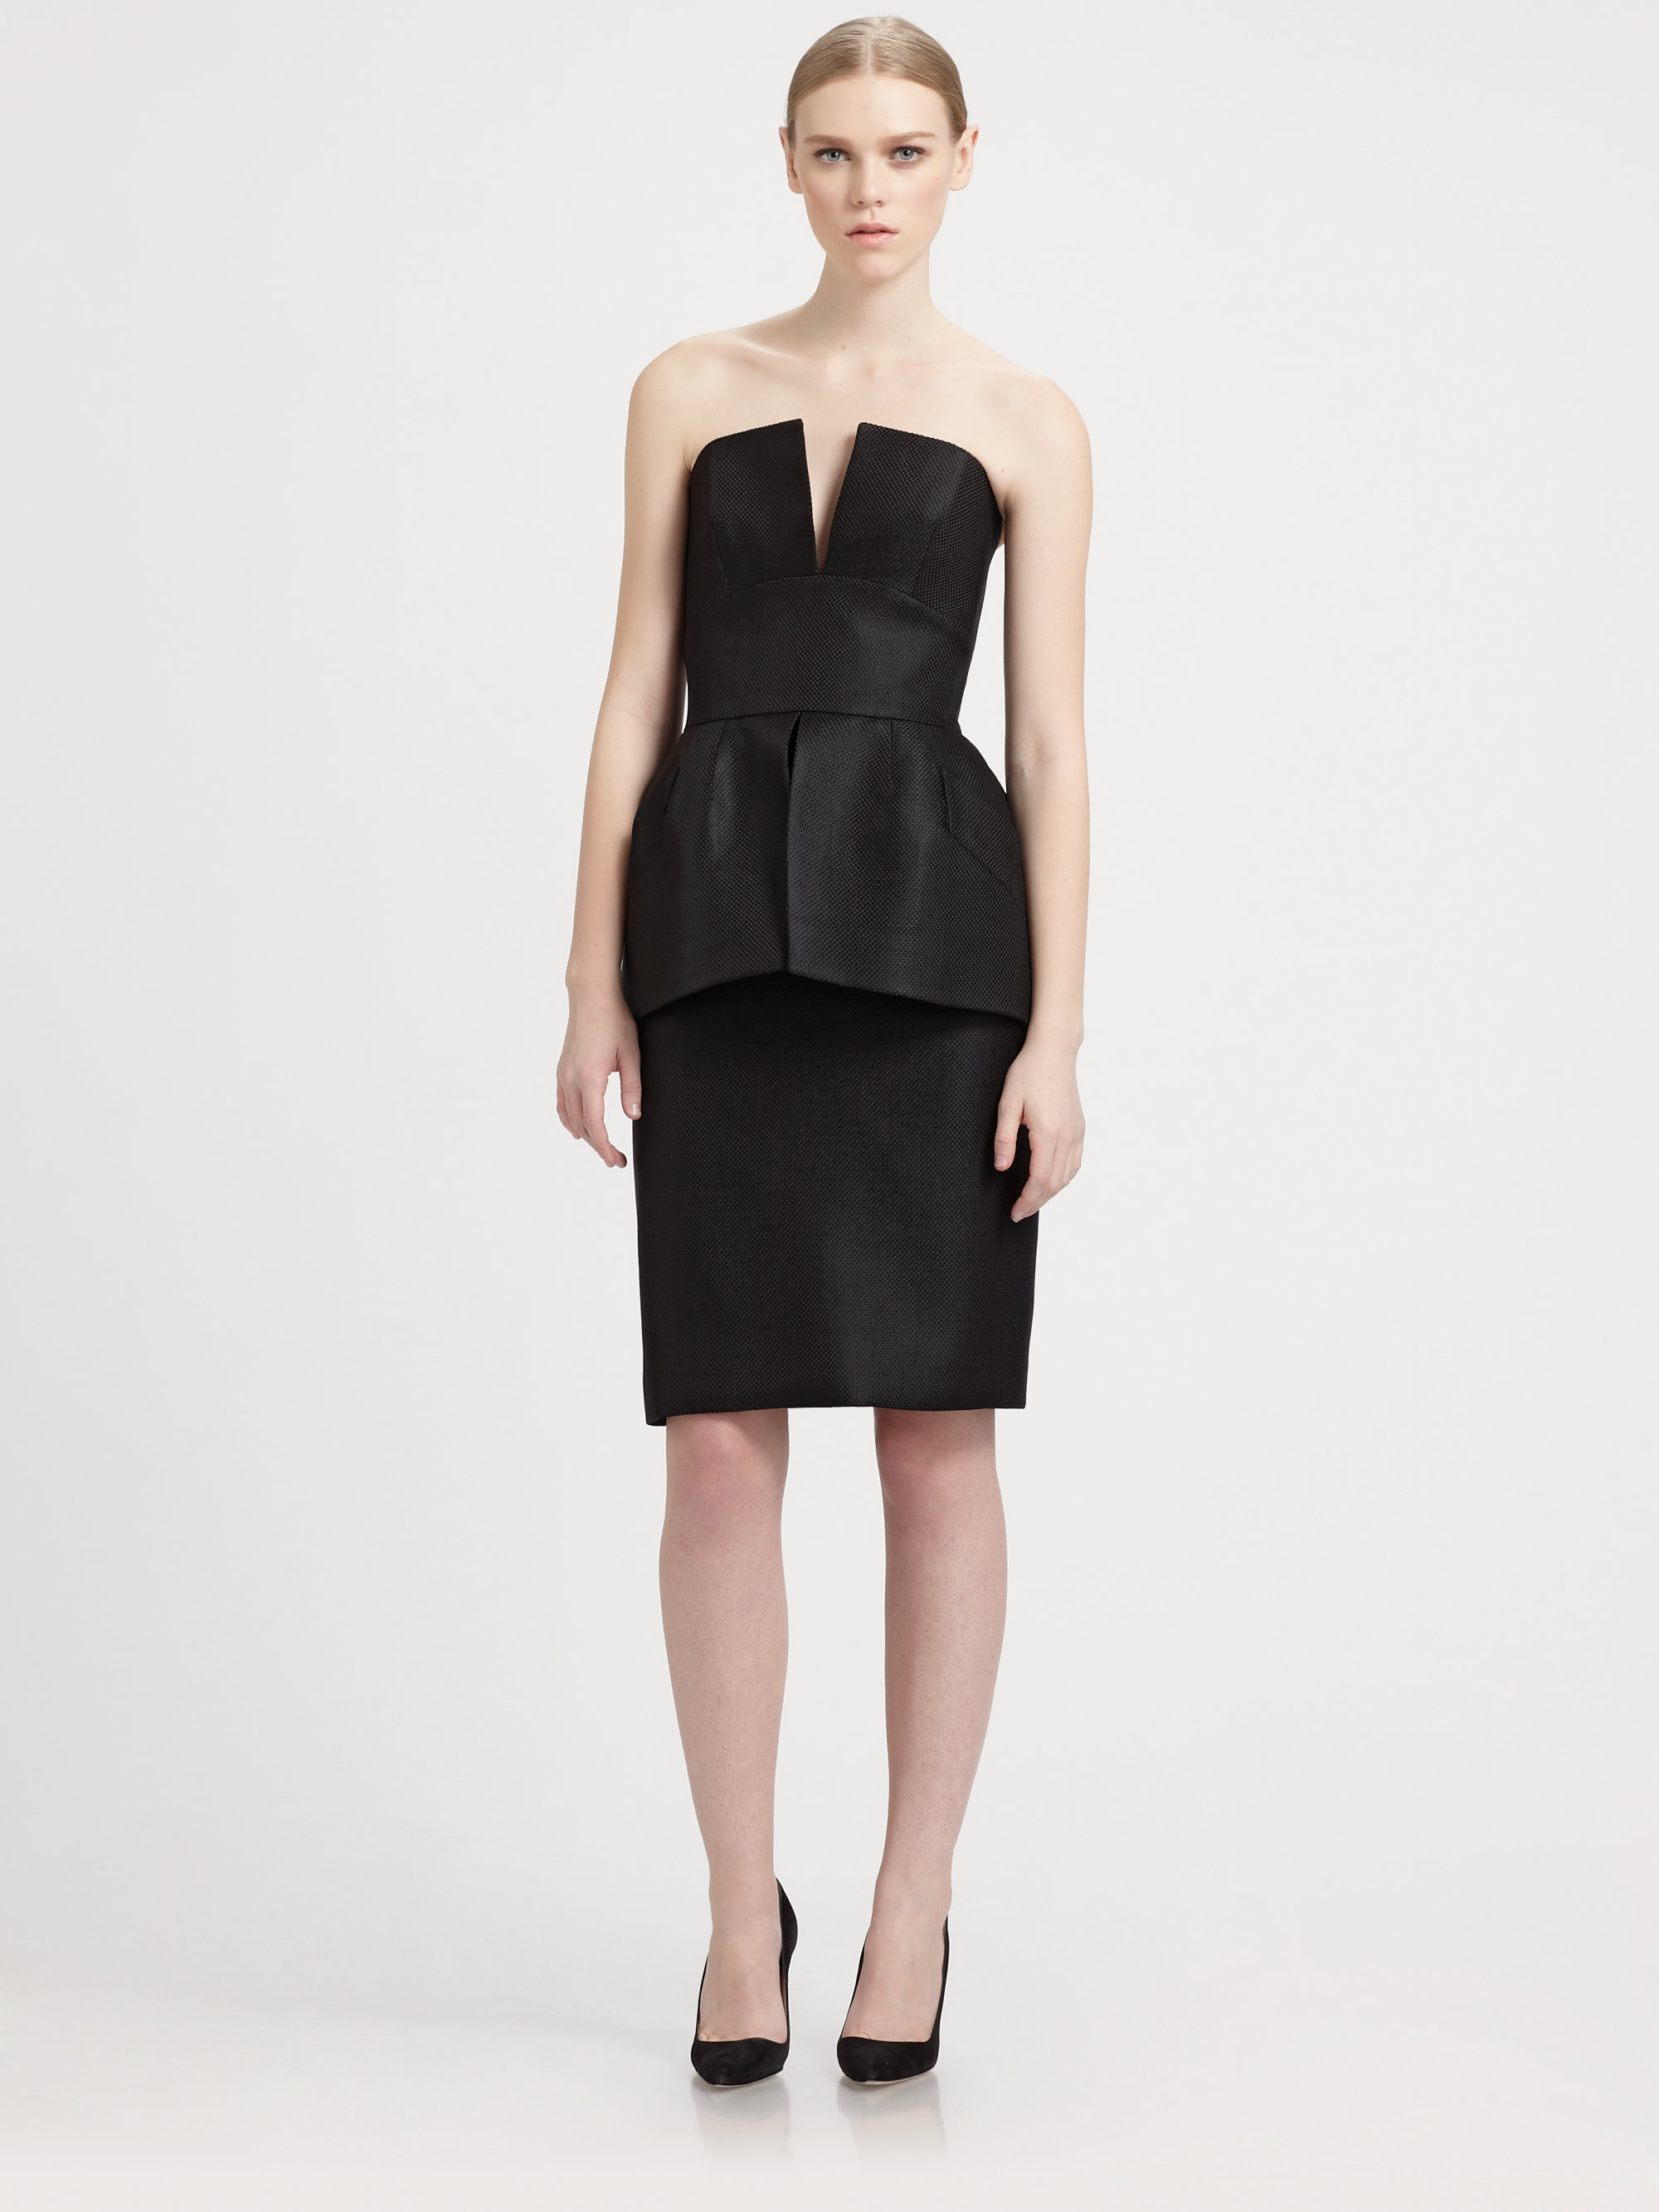 Lyst - Martin Grant Strapless Peplum Dress in Black